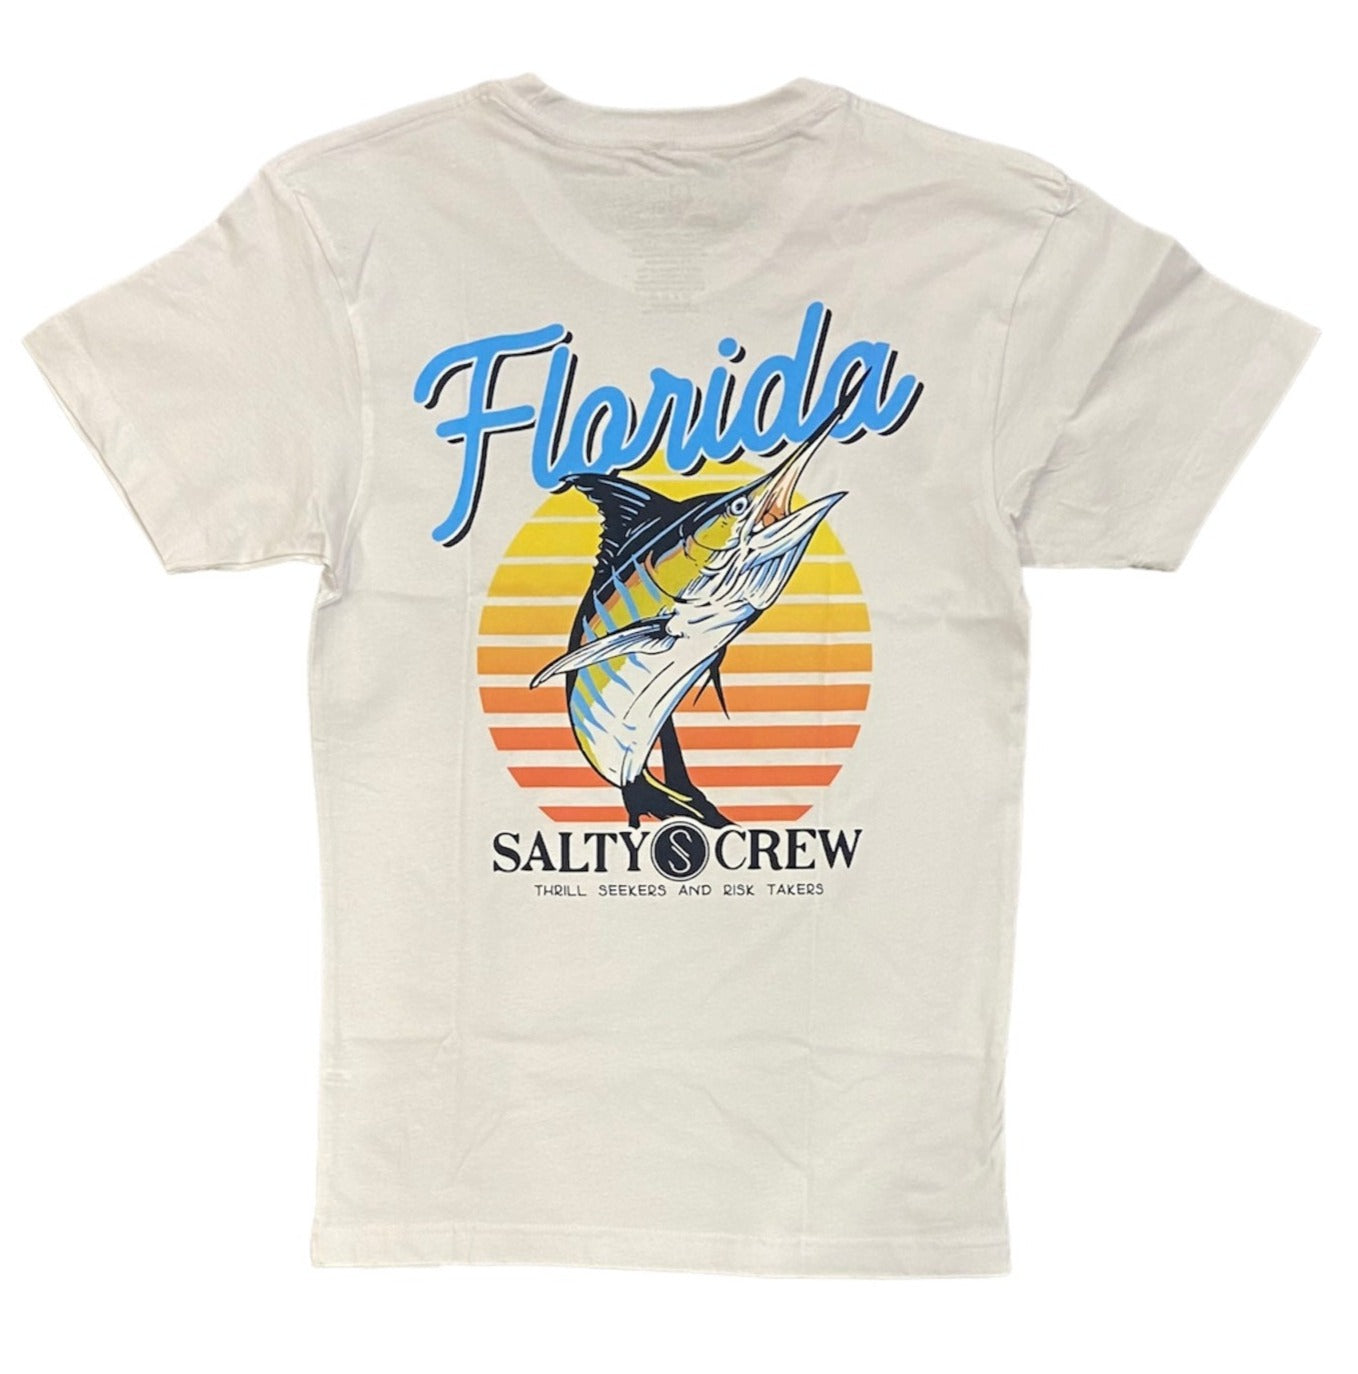 Salty Crew Florida Blue Bill Premium SS Tee - White